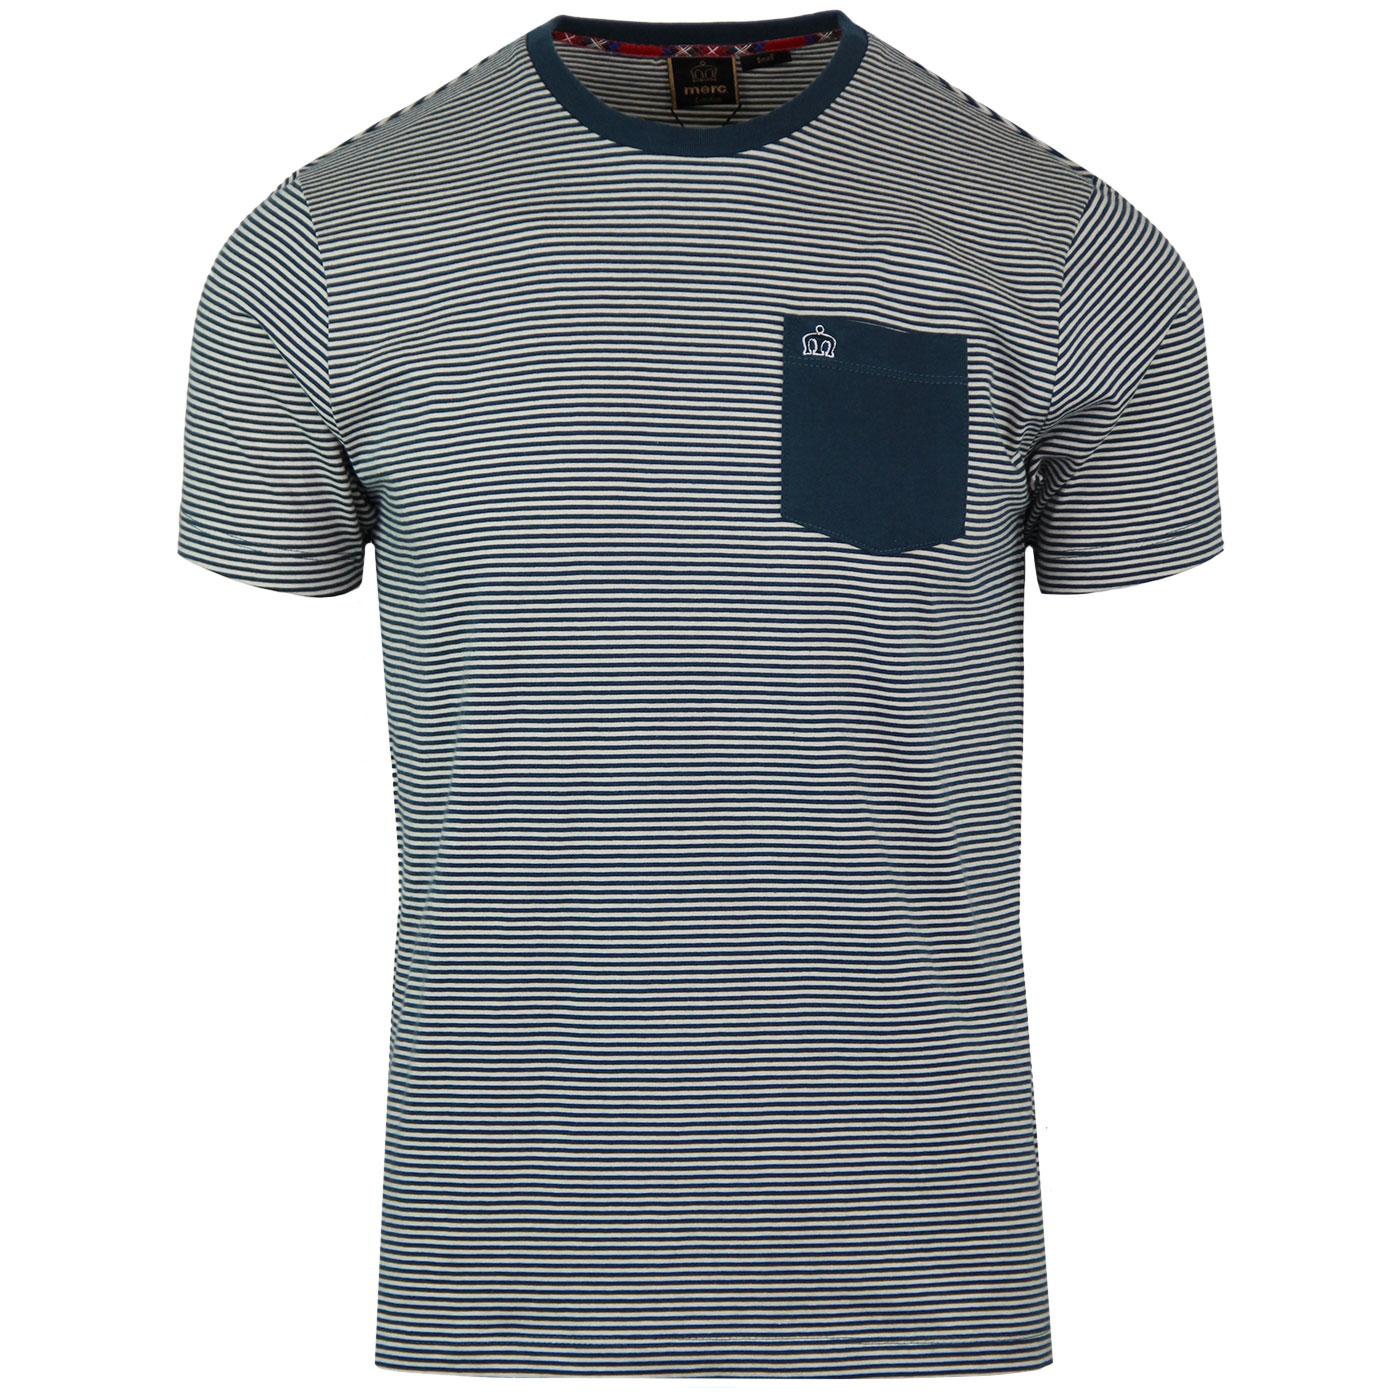 Holland MERC Retro Mod Stripe Pocket T-shirt TEAL